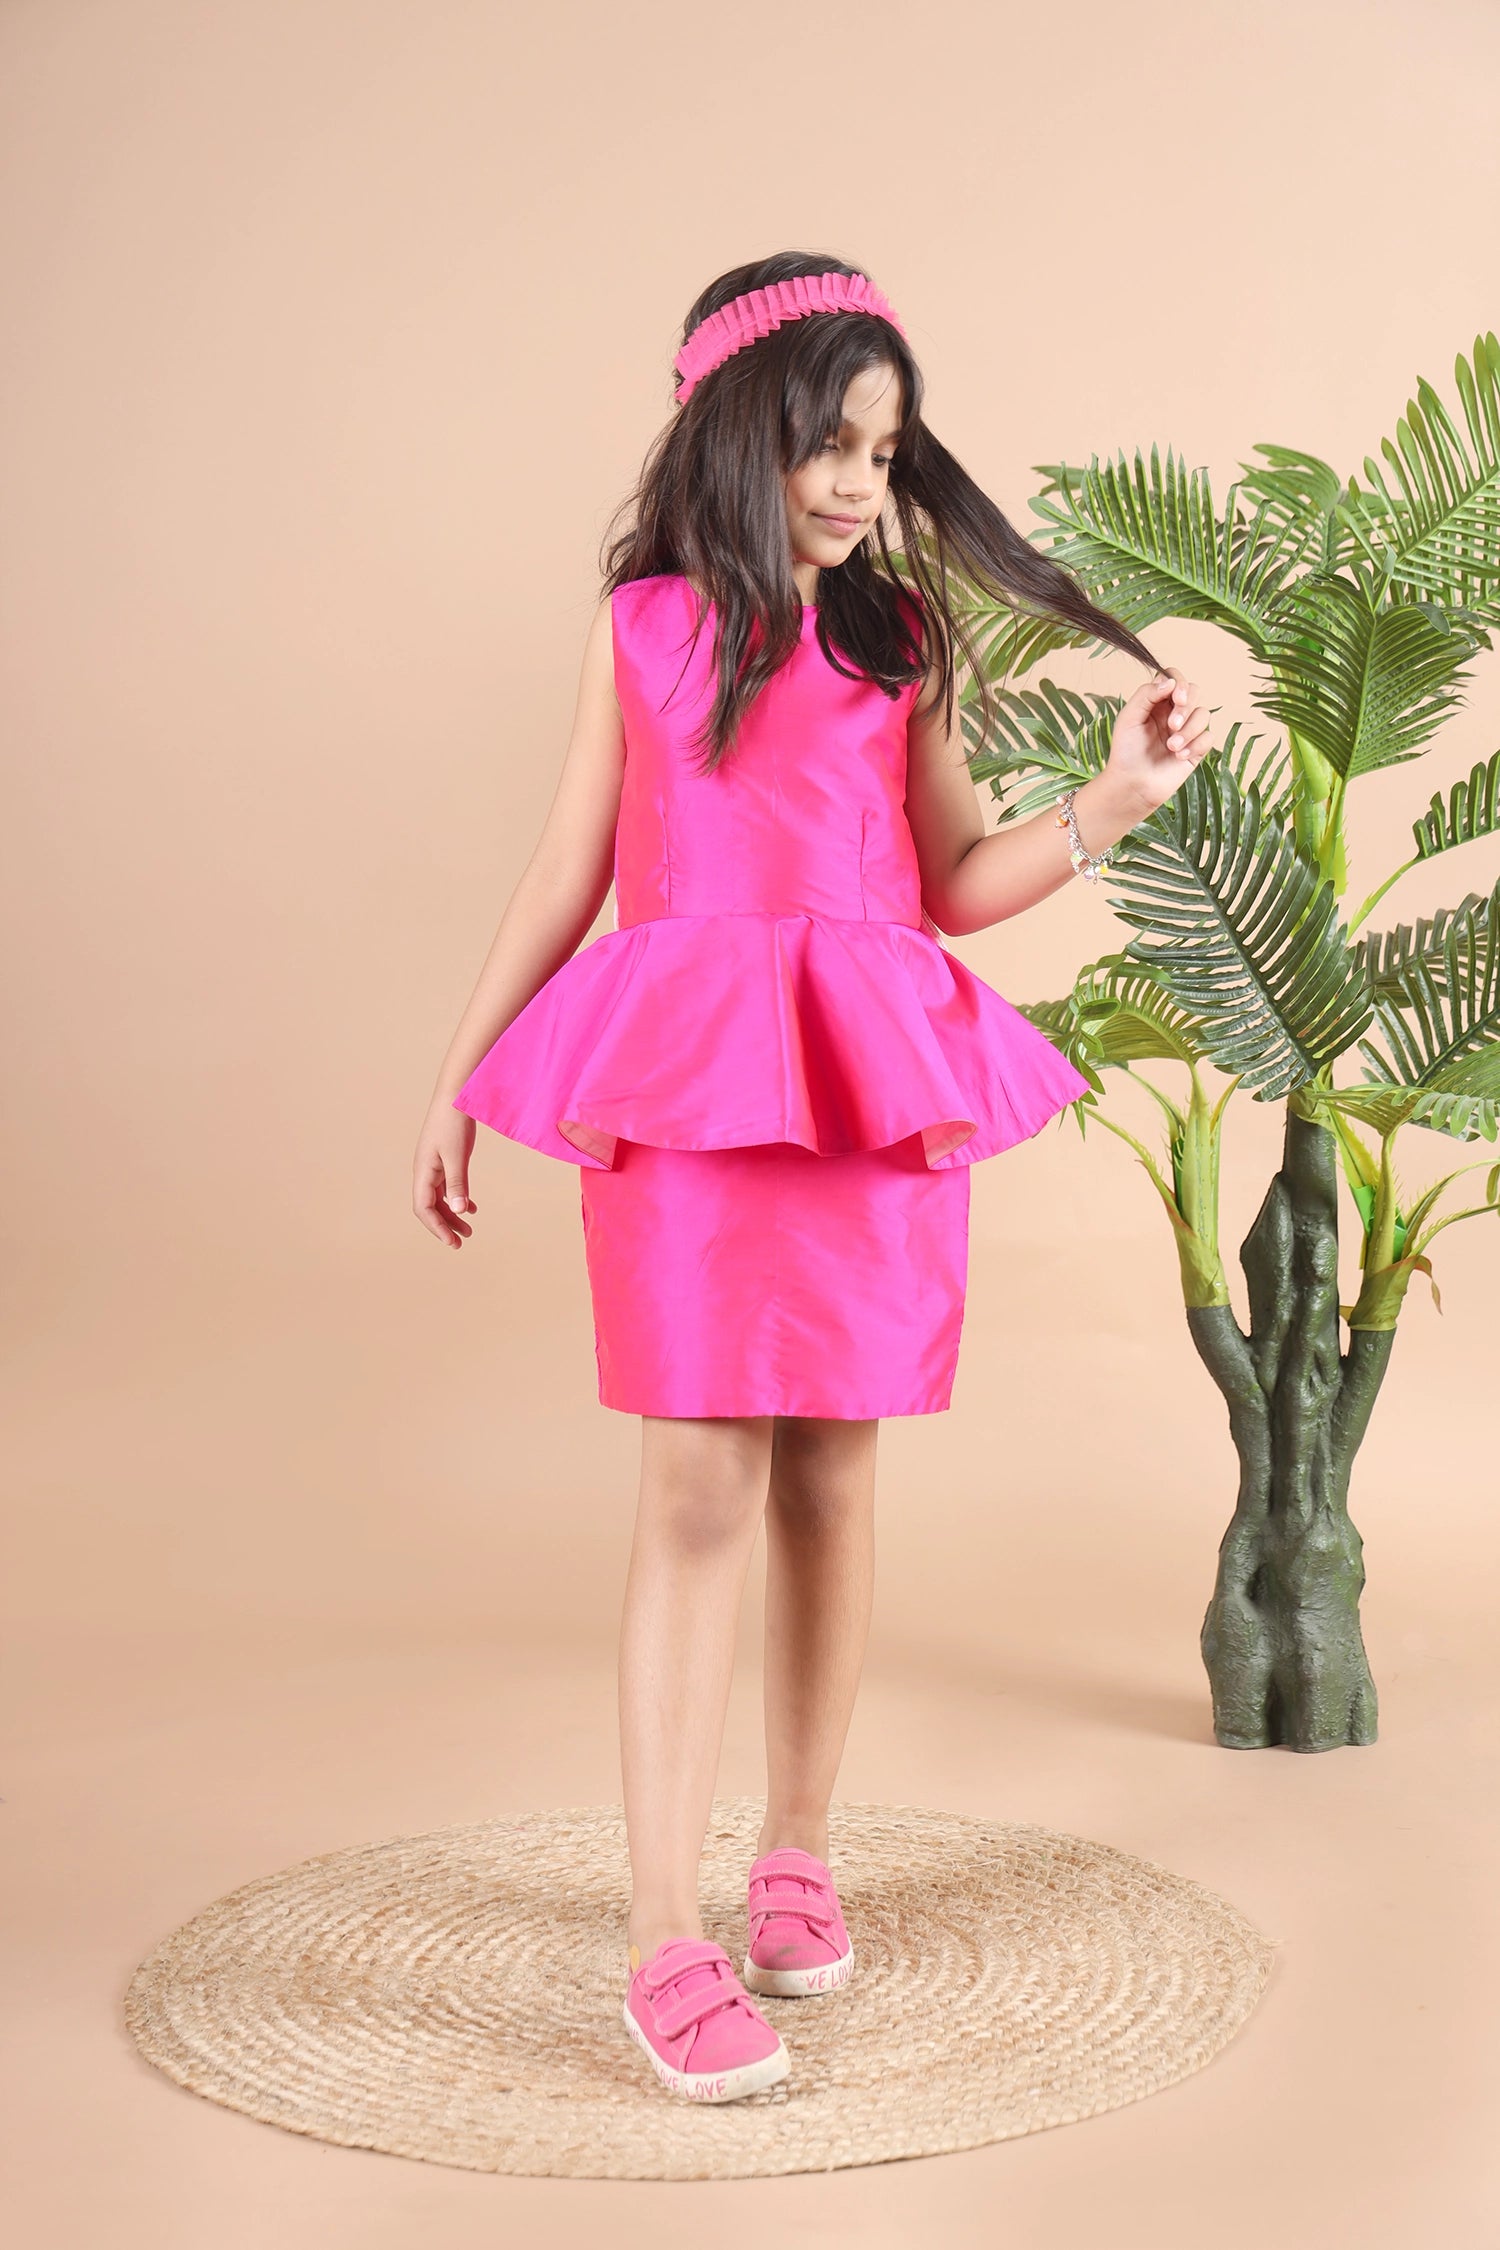 Hot Pink Peplum Party Dress, Girls Party Dress, Birthday Dress for Girls